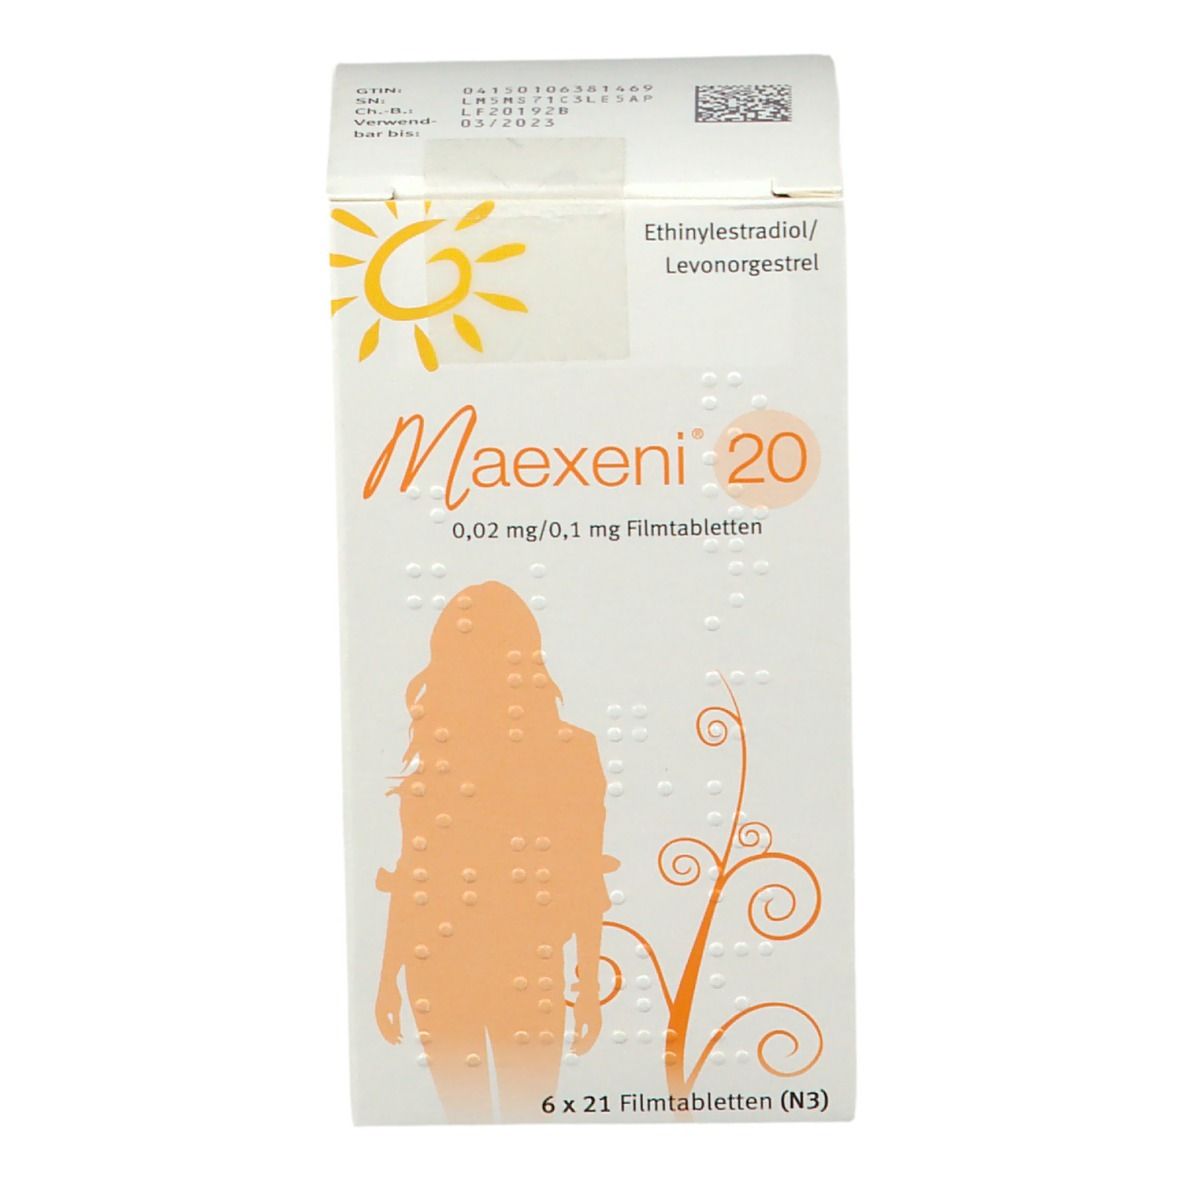 Maexeni® 20